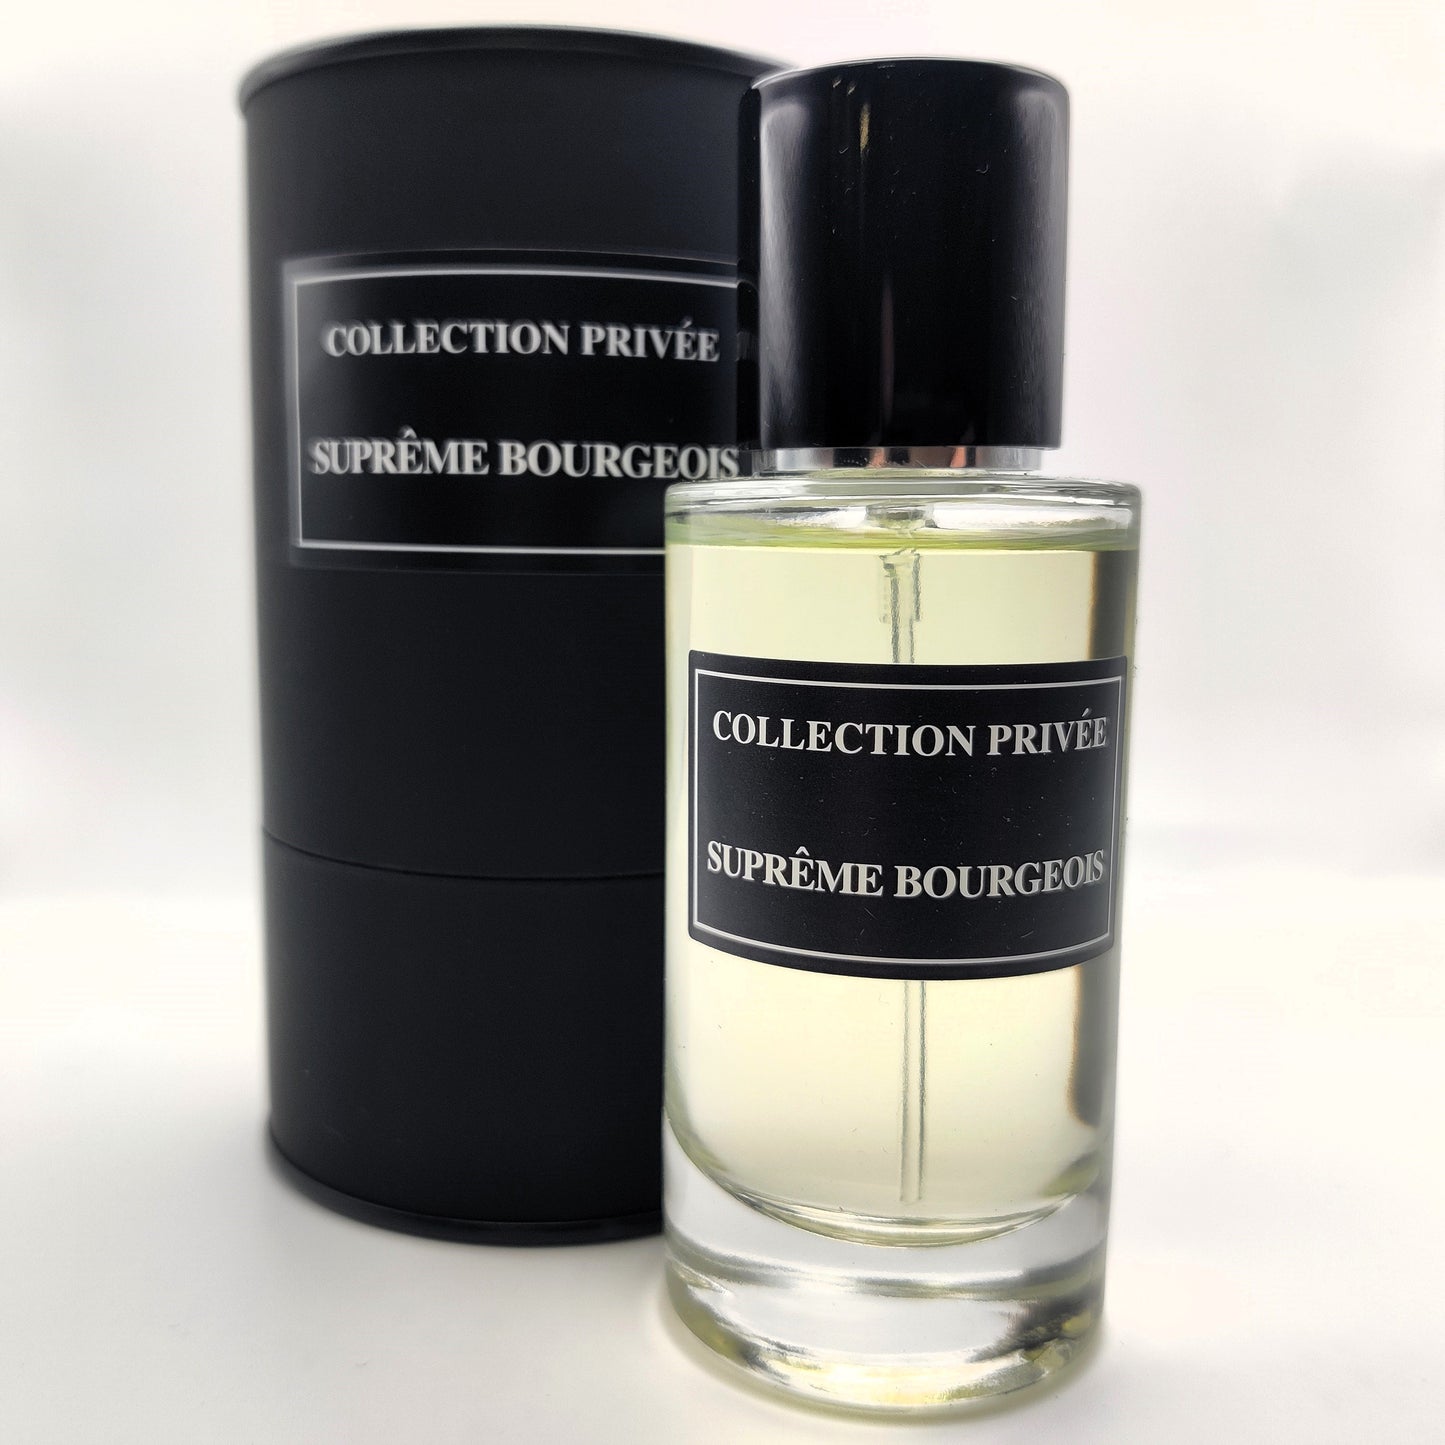 Collection Privée - Suprême Bourgeois - 50ml